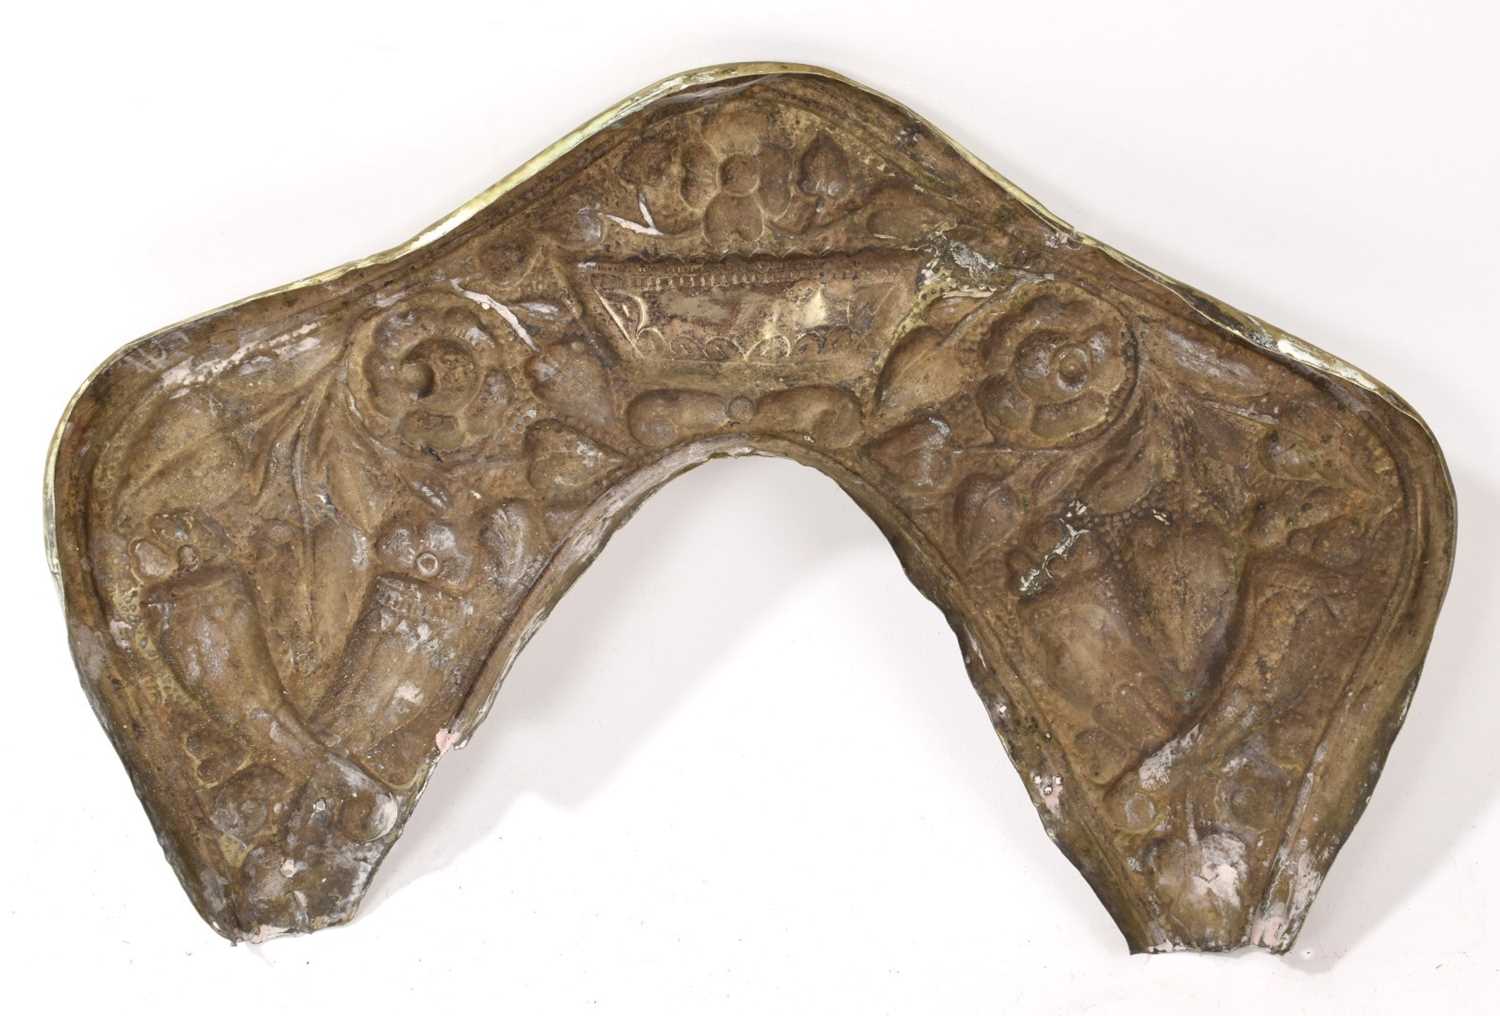 19th century South American white metal saddle mount - Image 5 of 5